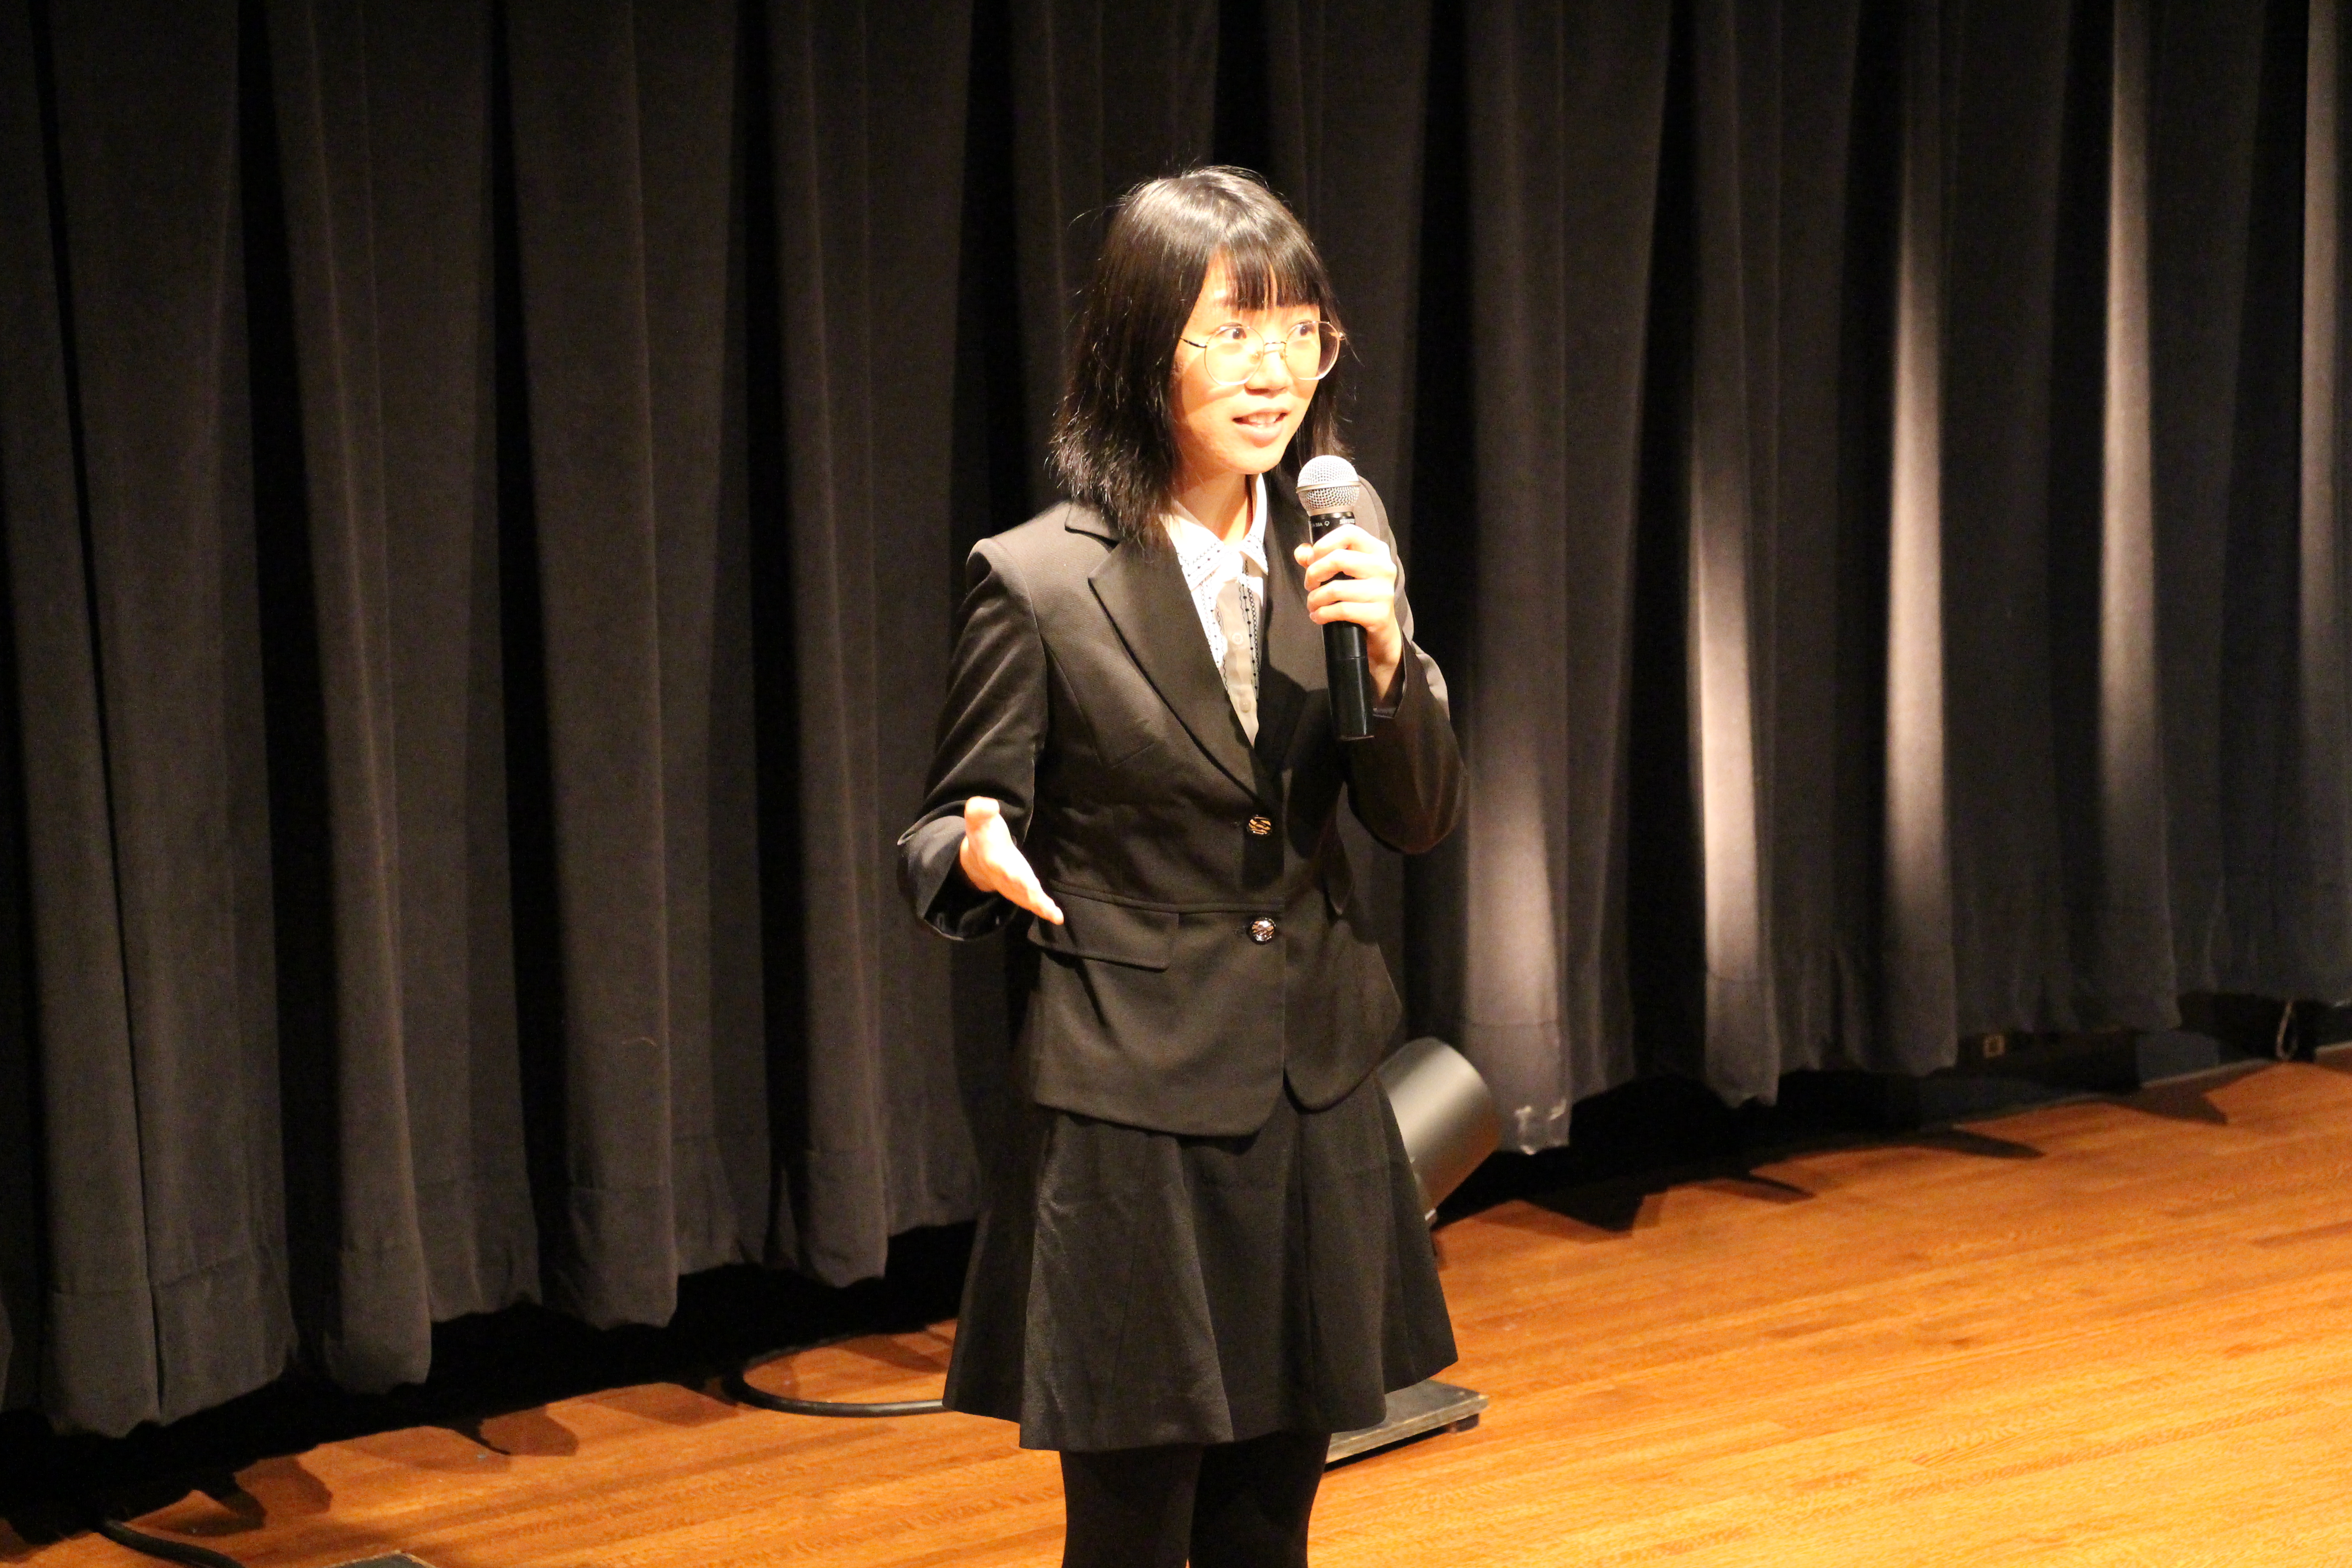 Yaling Liu presents her research